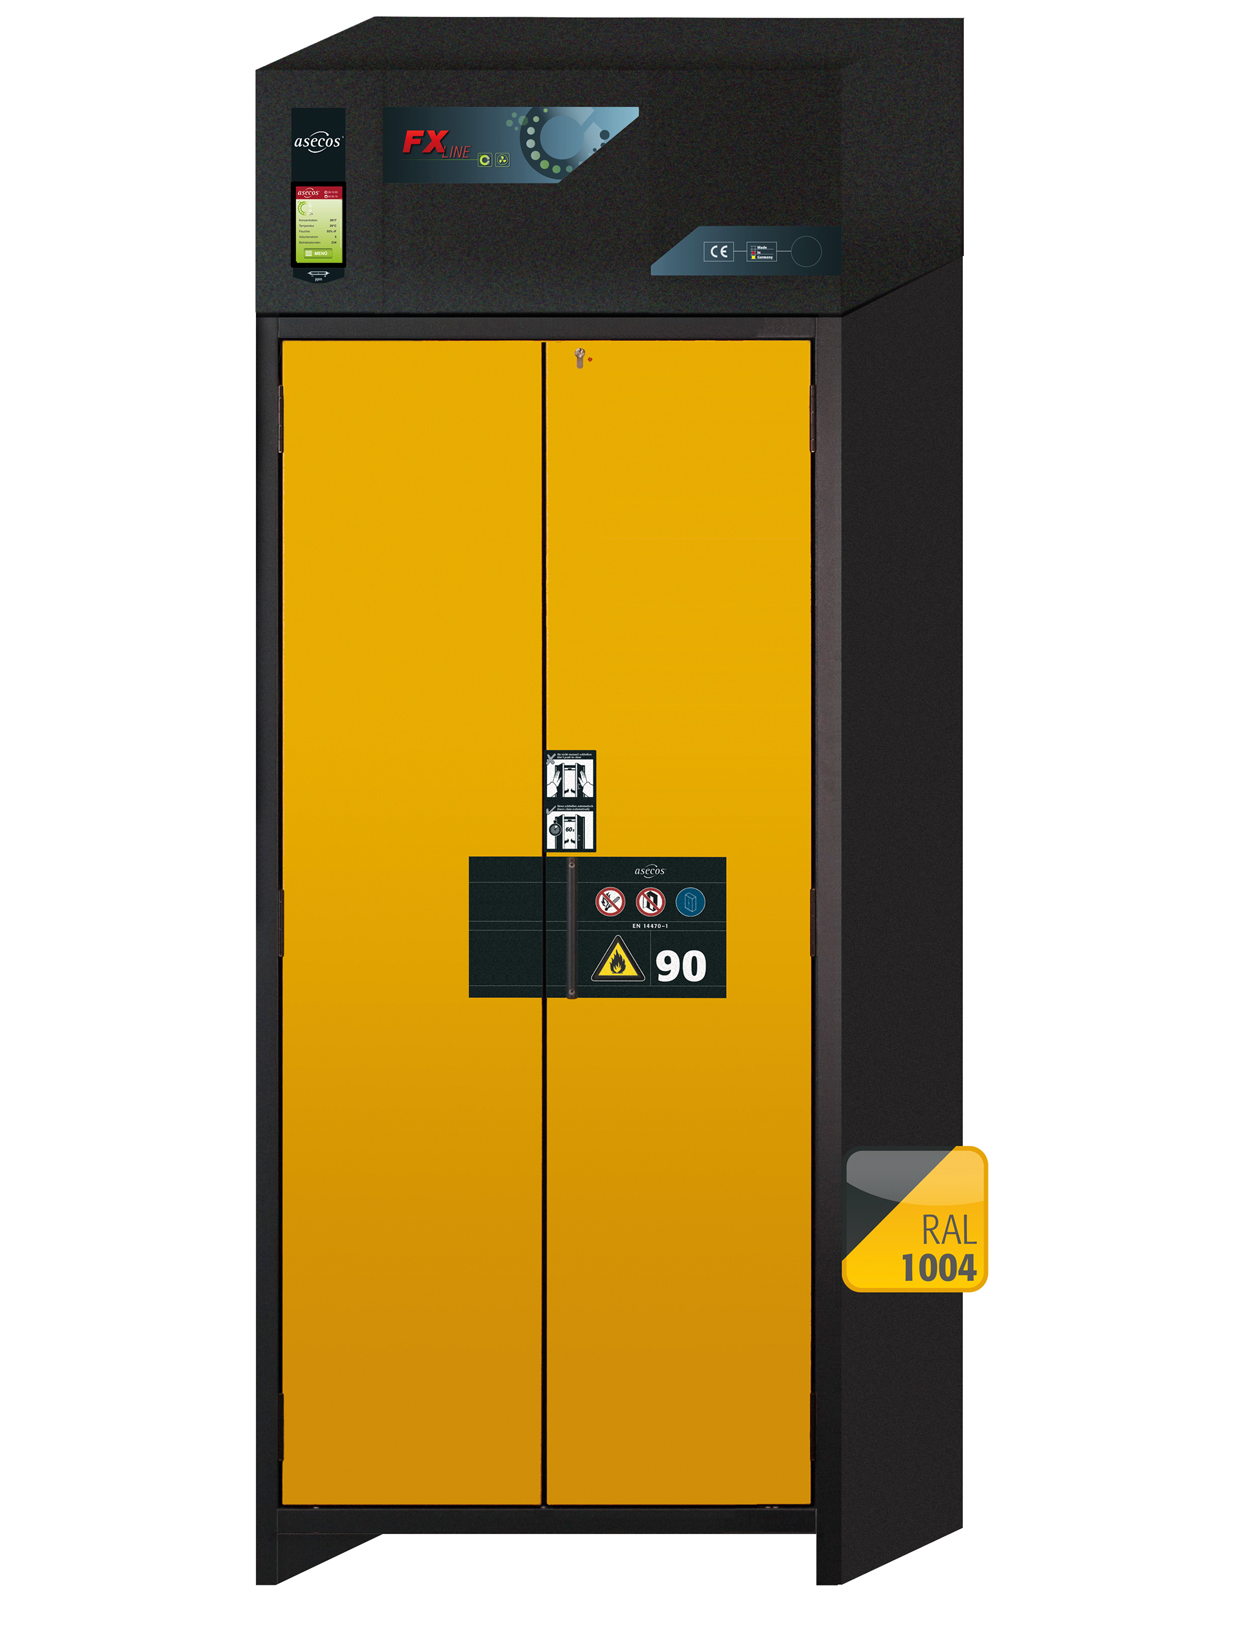 Recirculating Air Filter Storage Cabinet Fx90 229 090 Wdac 32910